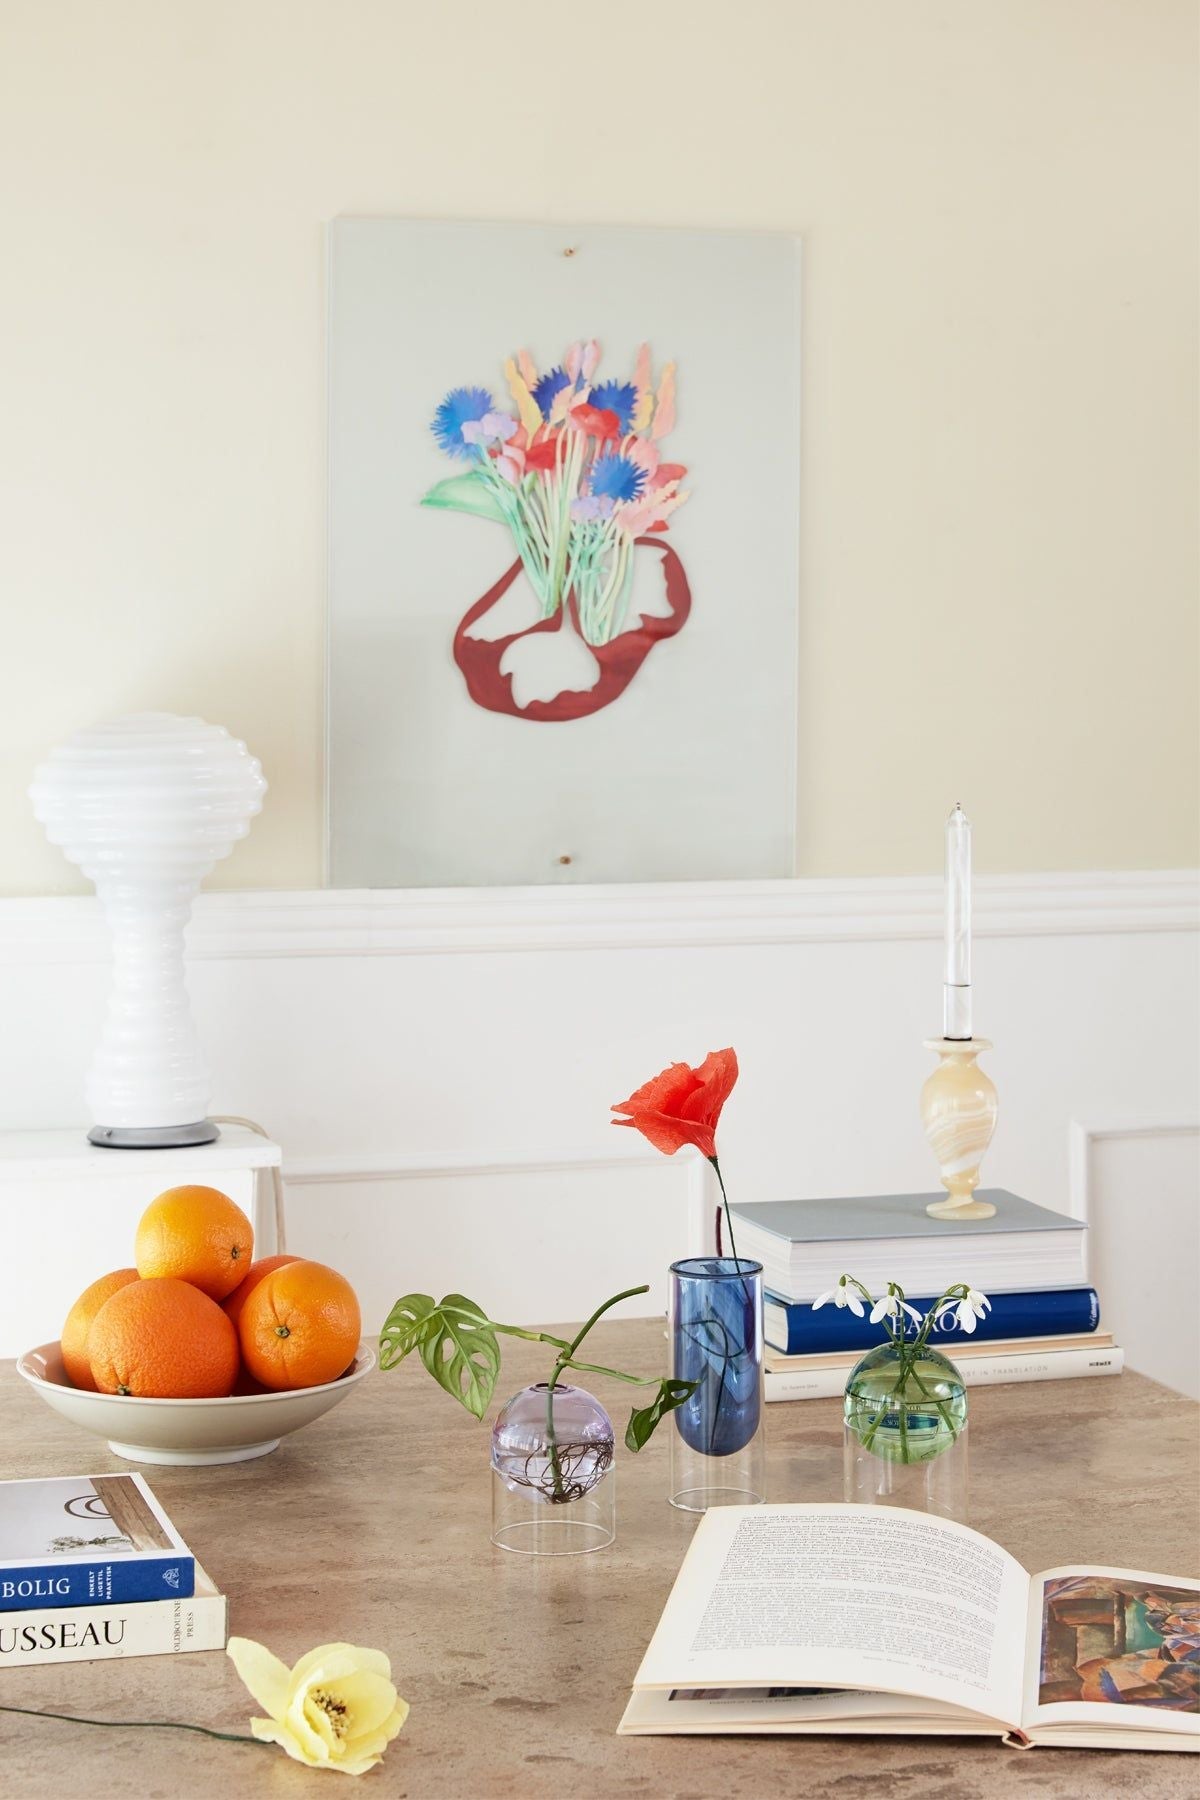 Studio über Blumenrohr Vase 16 cm, blau